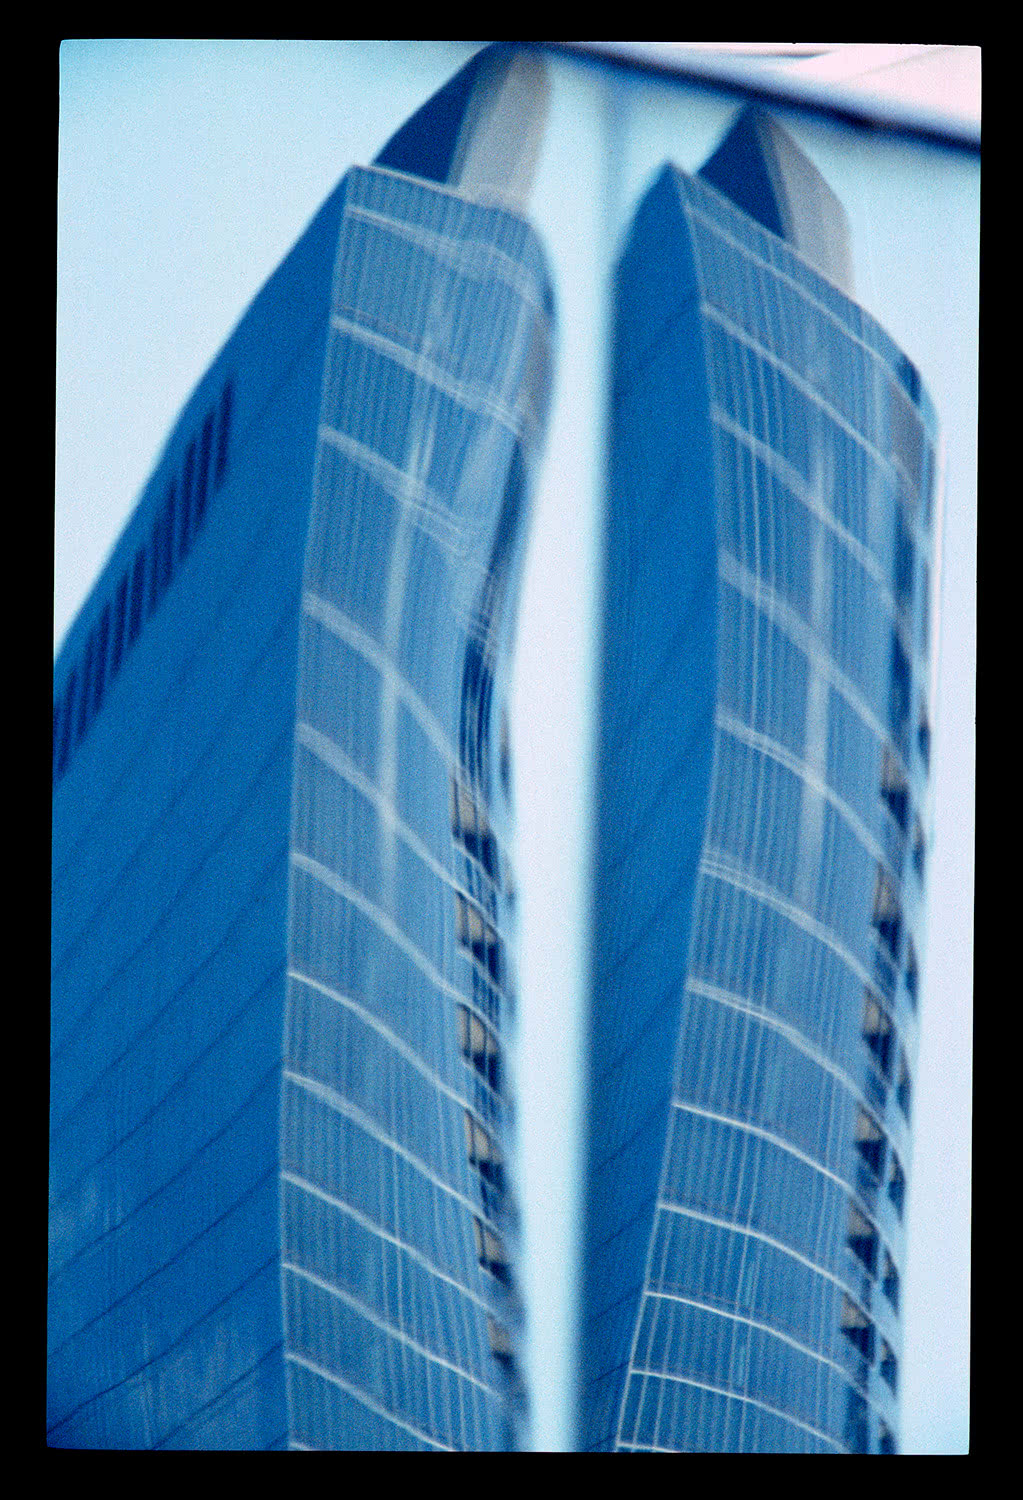 Melbourne city building reflections